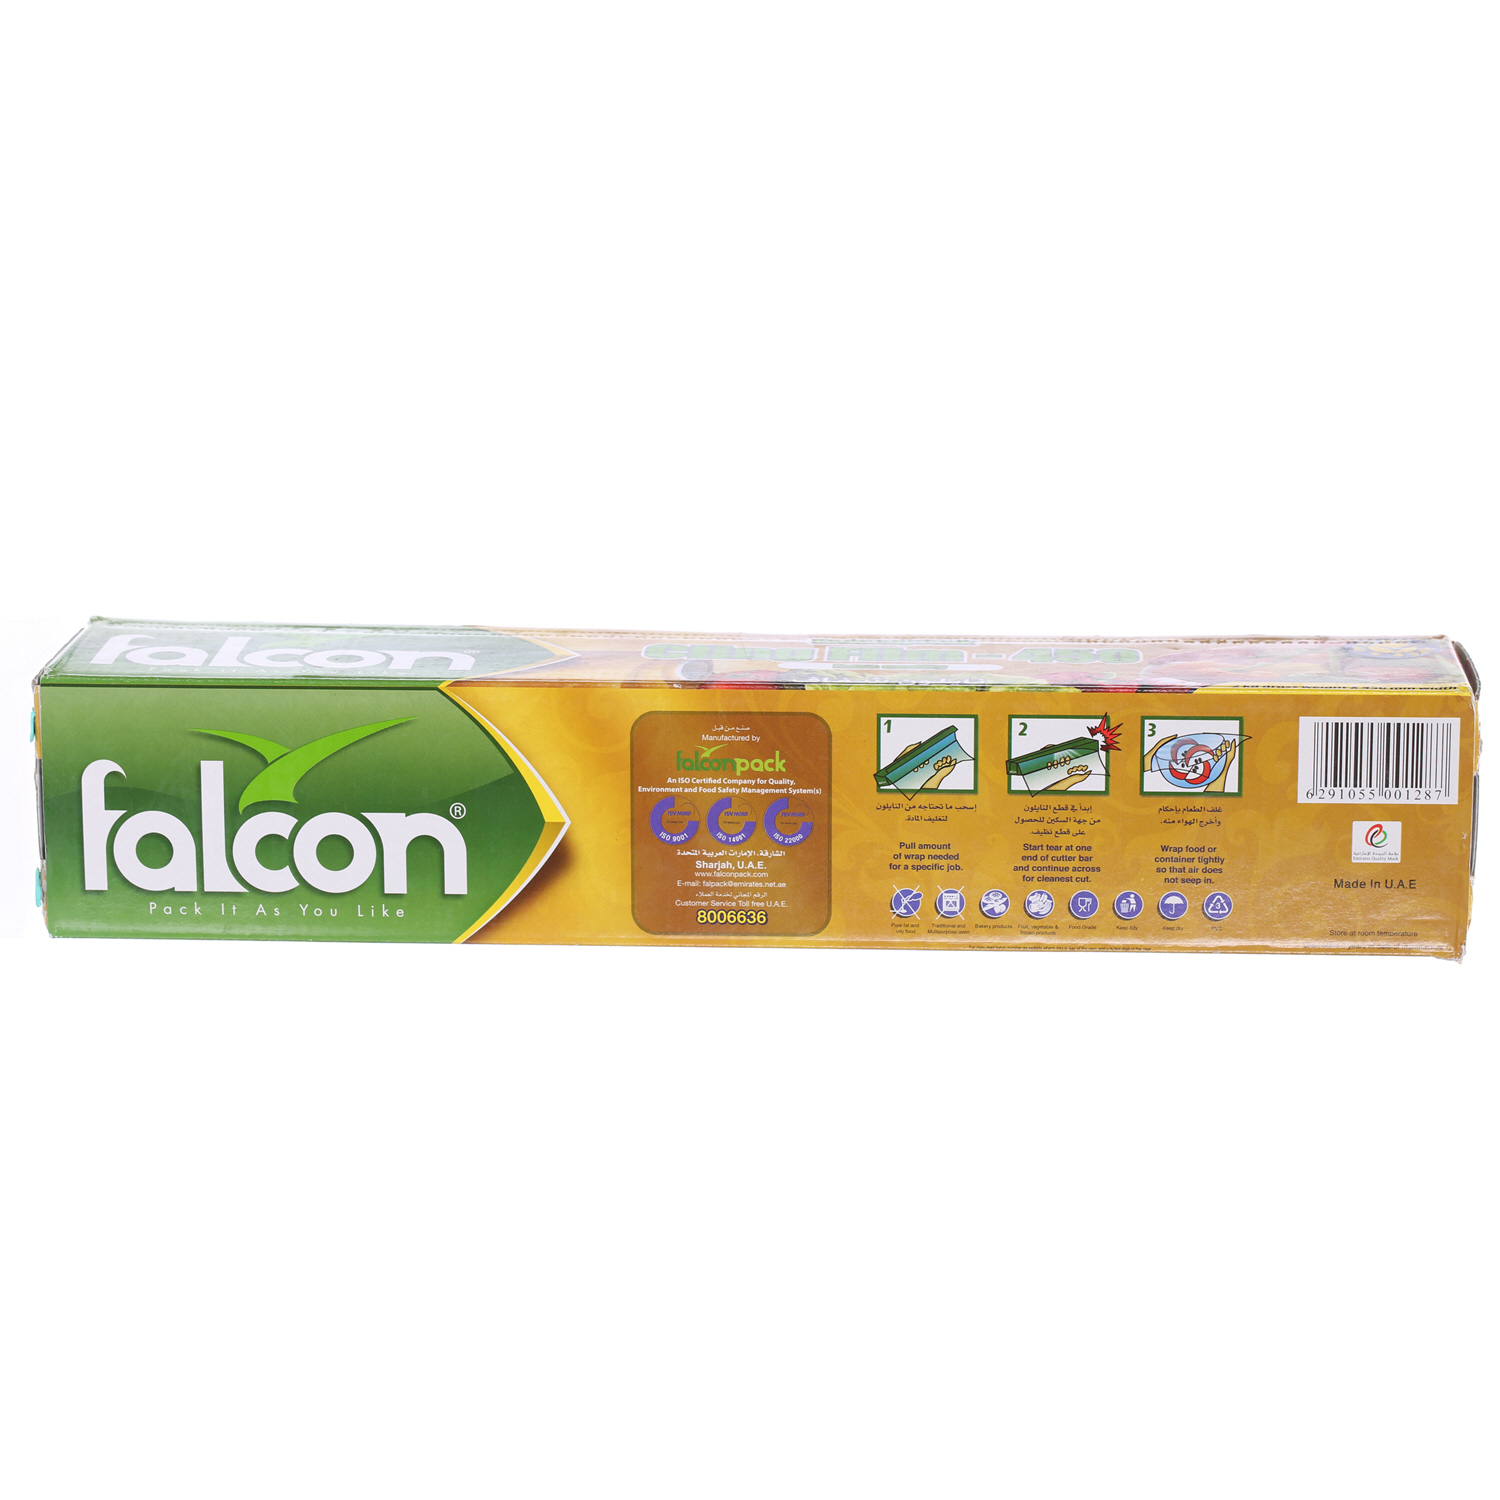 Falcon Cling Film 45 cm × 2 Kg